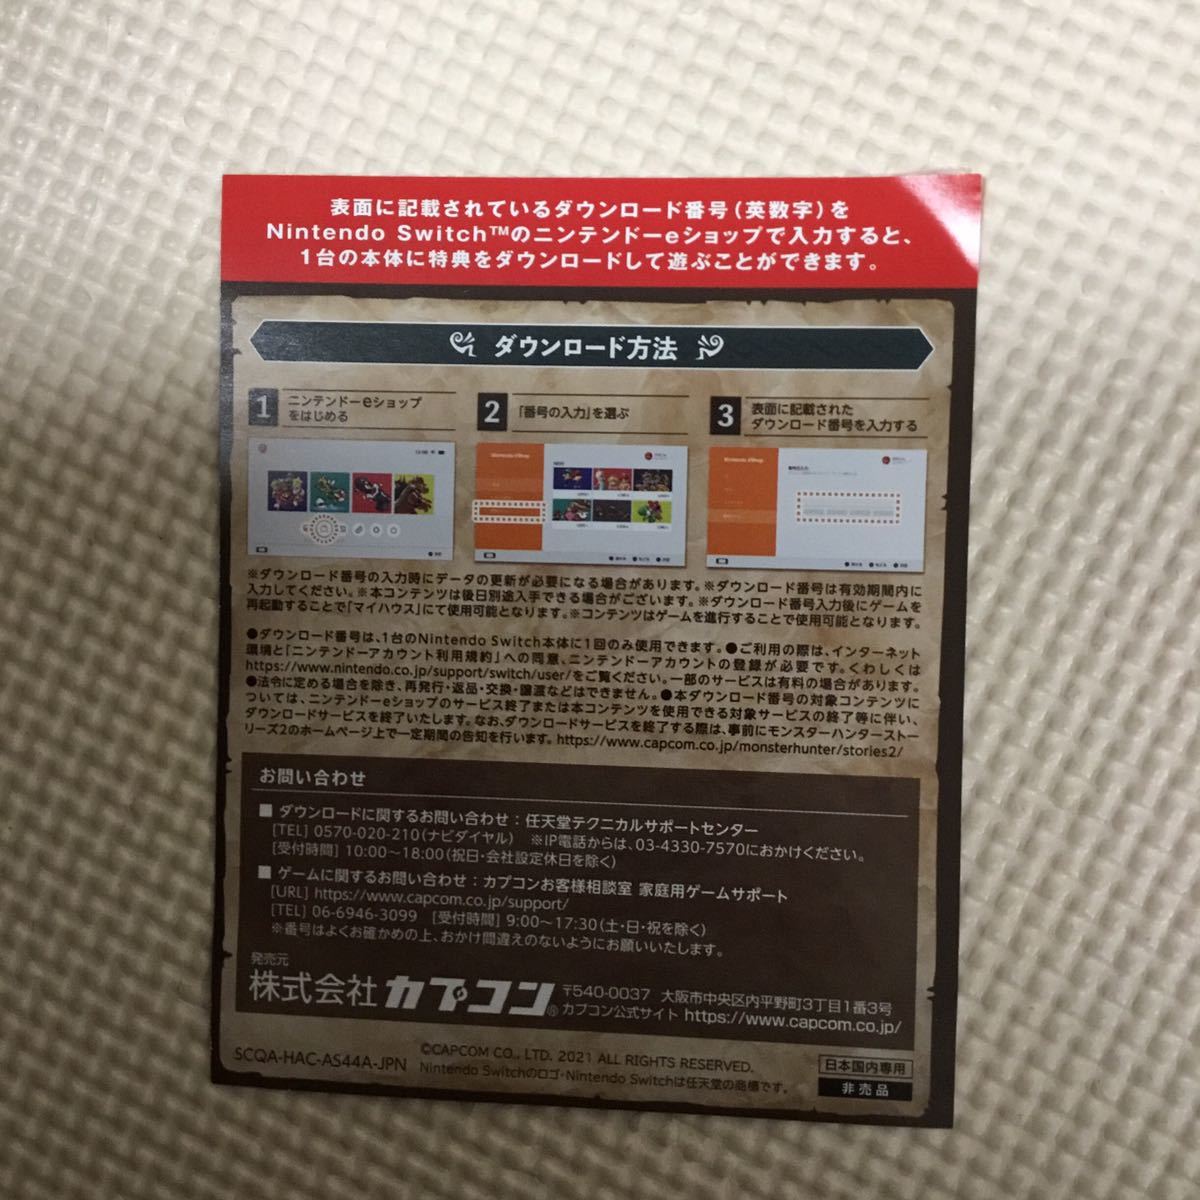 Nintendo Switch モンスターハンターストーリーズ2 限定特典 ダウンロード番号 ニンテンドースイッチソフト 売買されたオークション情報 Yahooの商品情報をアーカイブ公開 オークファン Aucfan Com